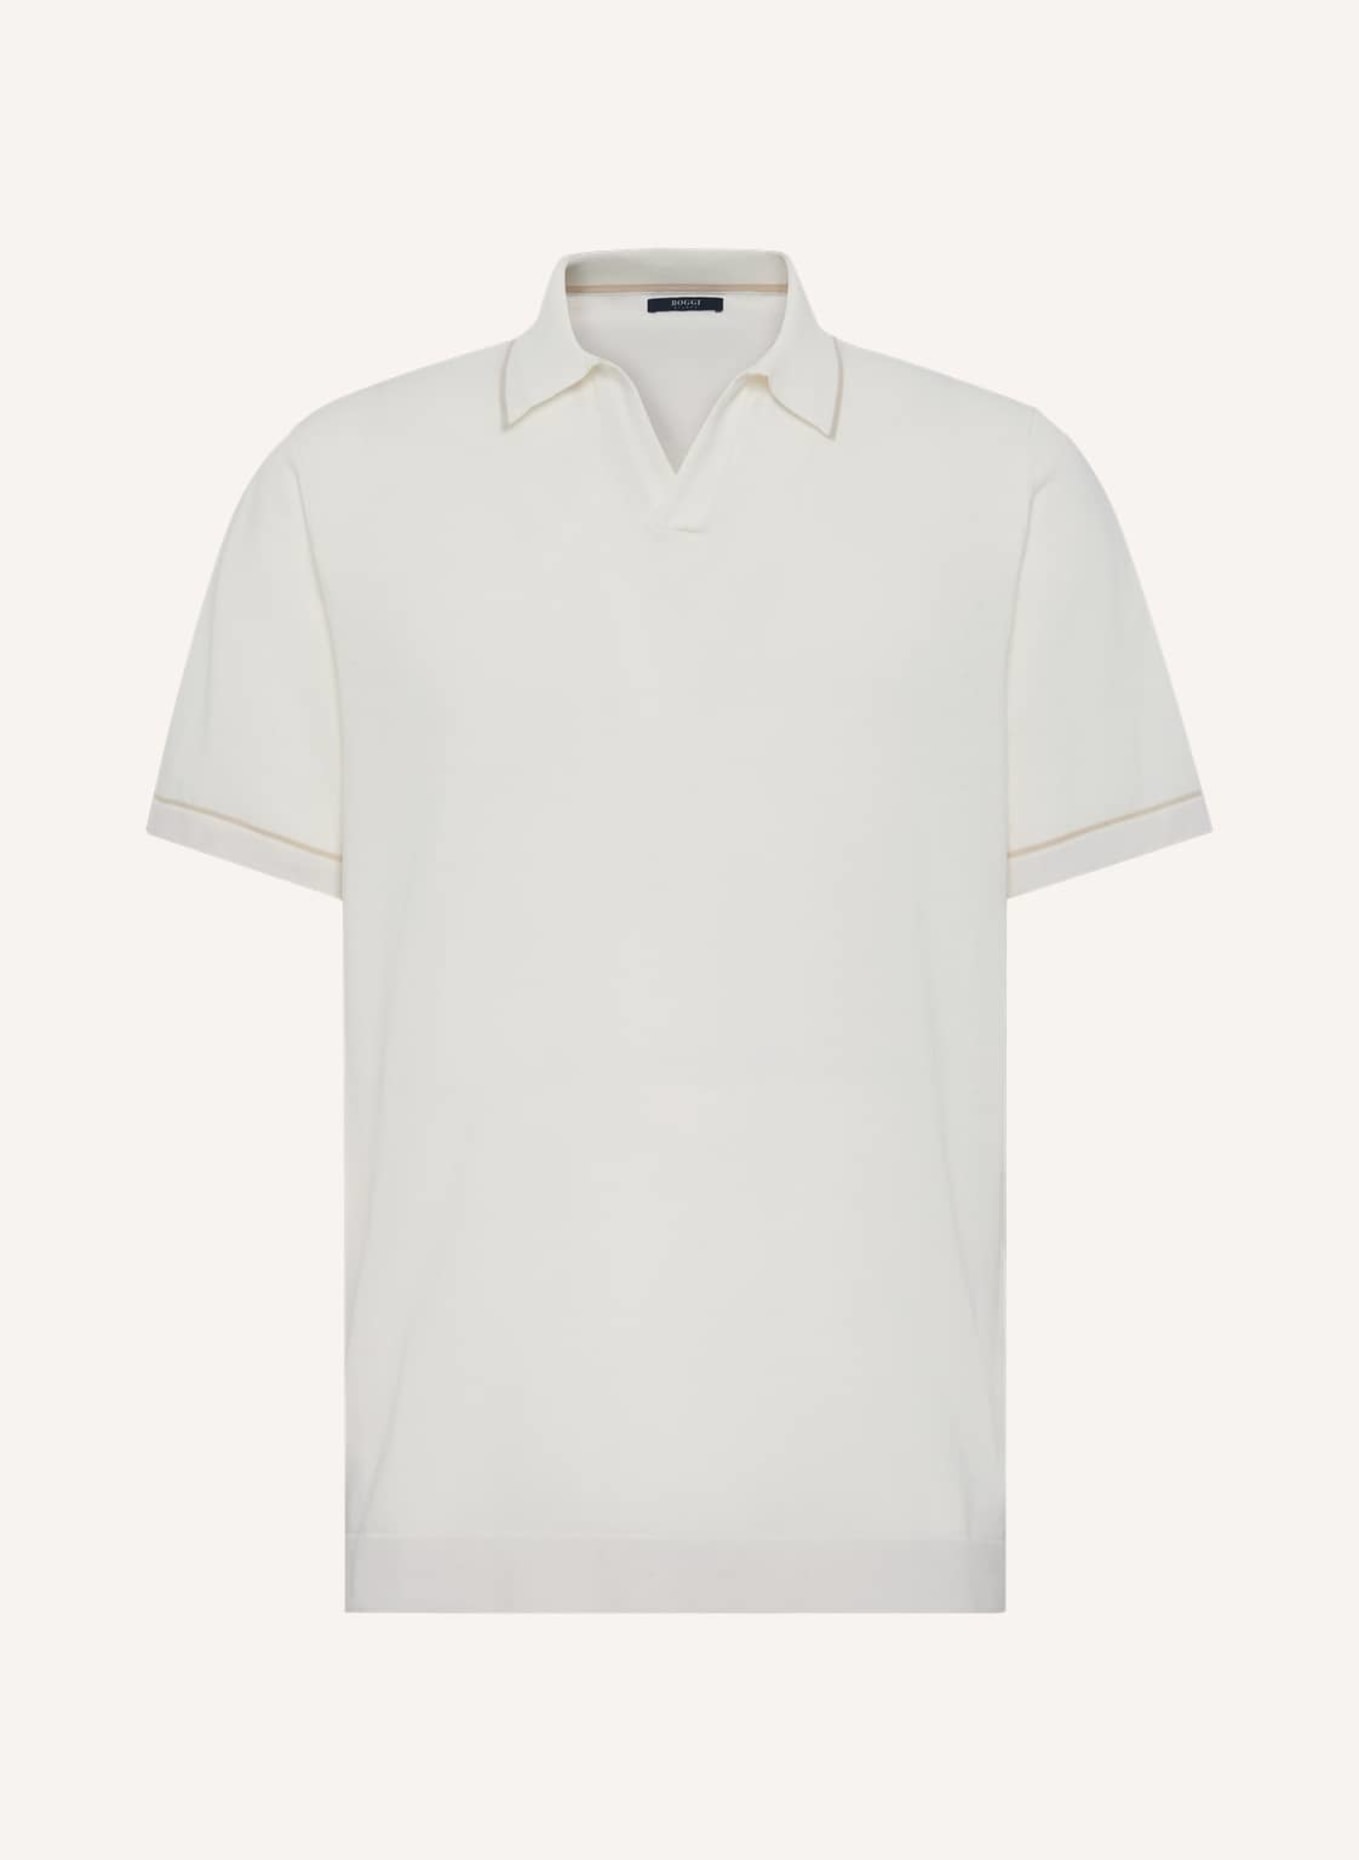 BOGGI MILANO Strick-Poloshirt, Farbe: WEISS (Bild 1)